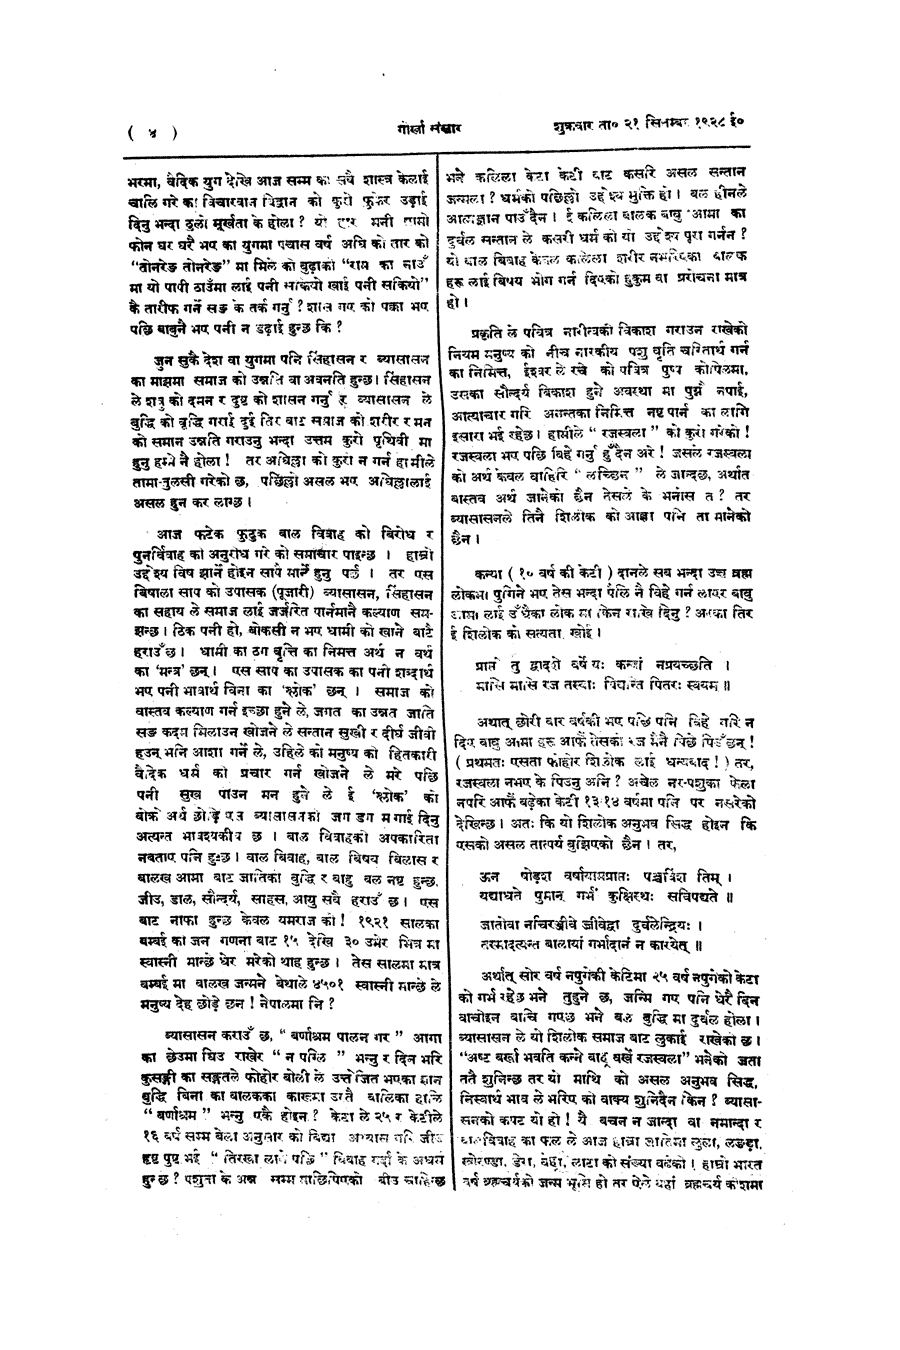 Gorkha Sansar, 21 Sept 1928, page 4